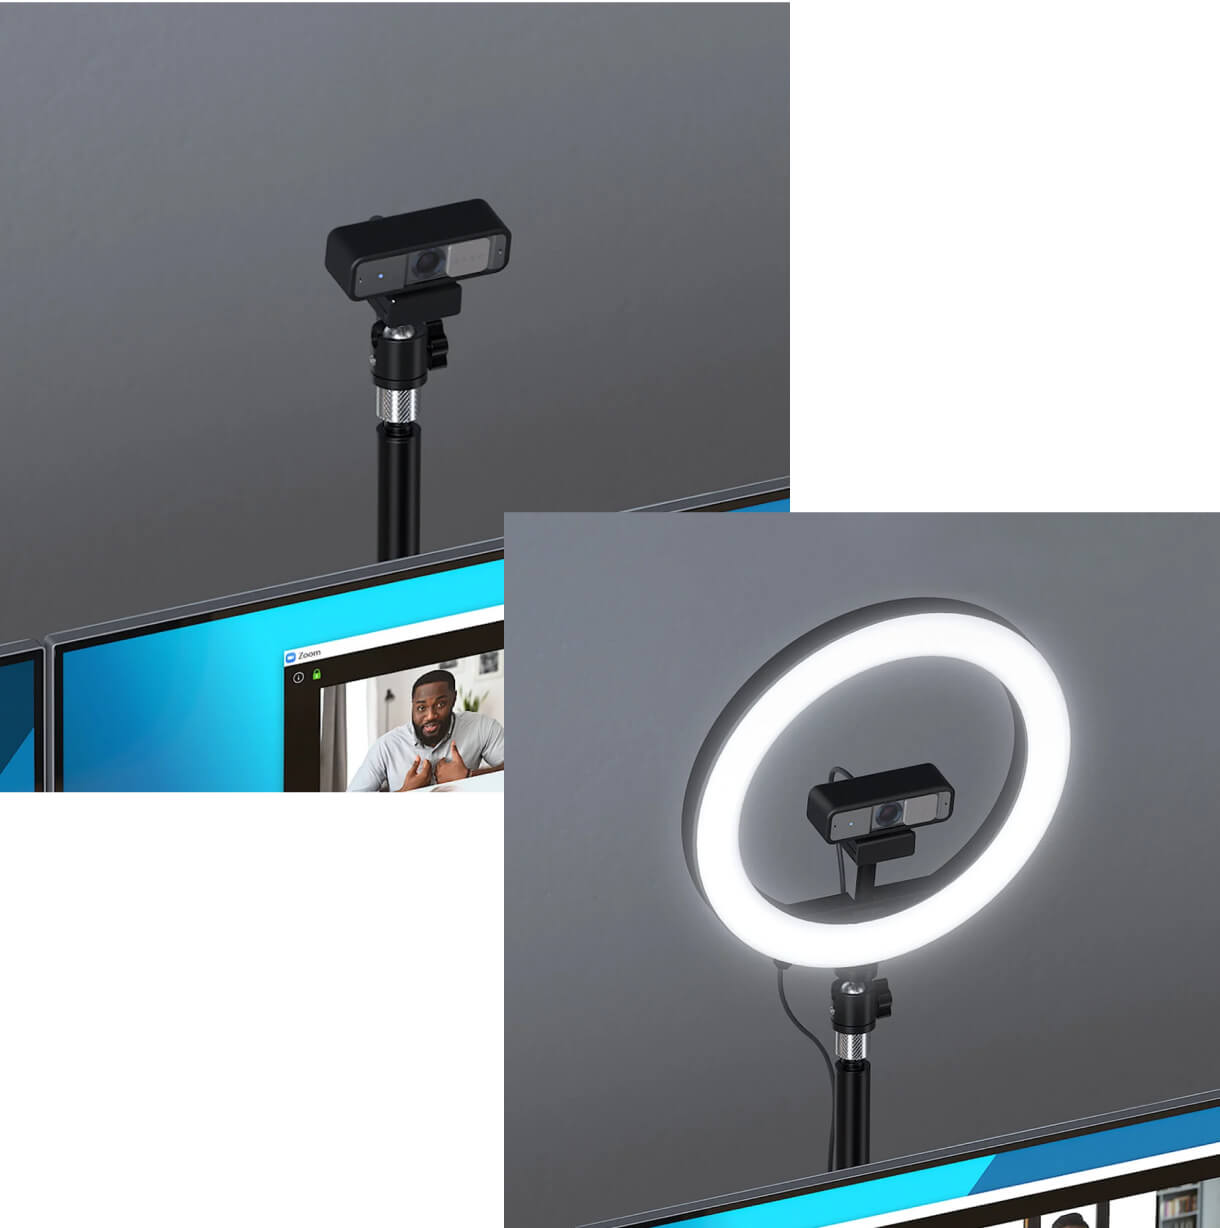 Configuración profesional de sobremesa con Webcam W2050 Pro 1080p Auto Focus de Kensington, Anillo luminoso bicolor L1000 con soporte para webcam, Abrazadera telescópica en forma de C A1000 y Switch de audio profesional 3 en 1 universal para auriculares
                            